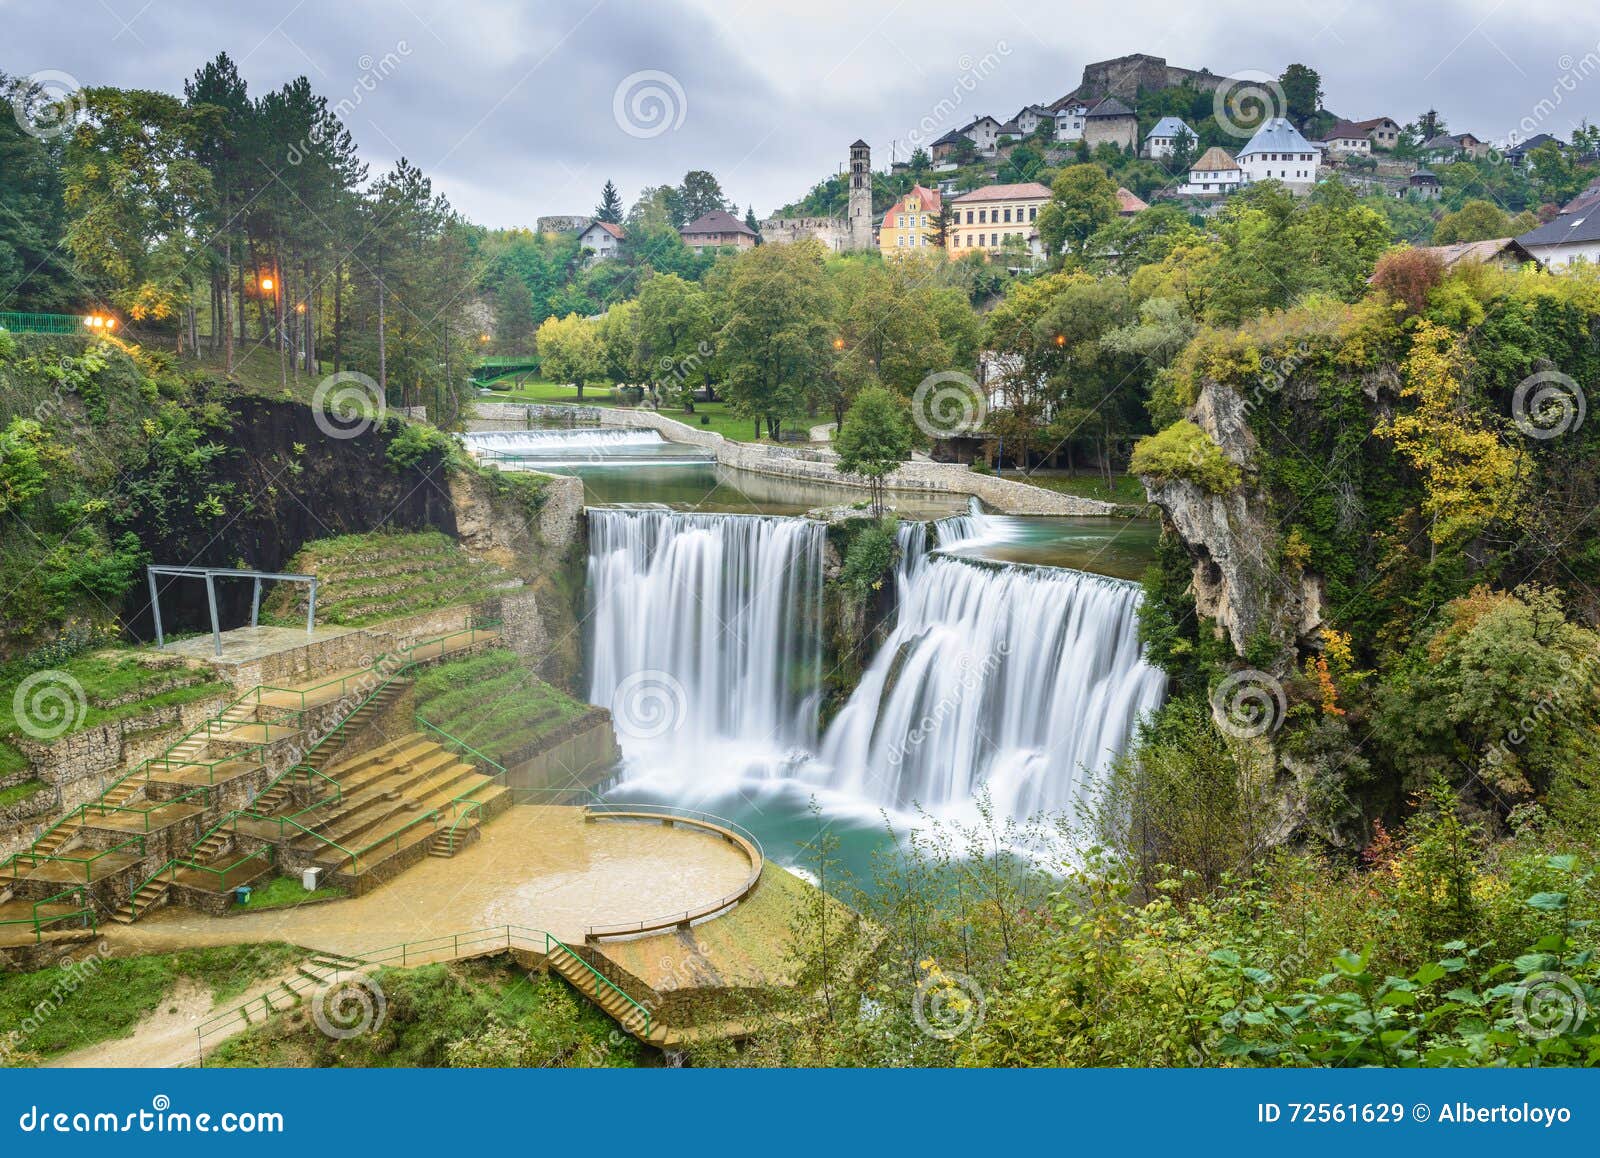 town of jajce and pliva waterfall, bosnia and herzegovina